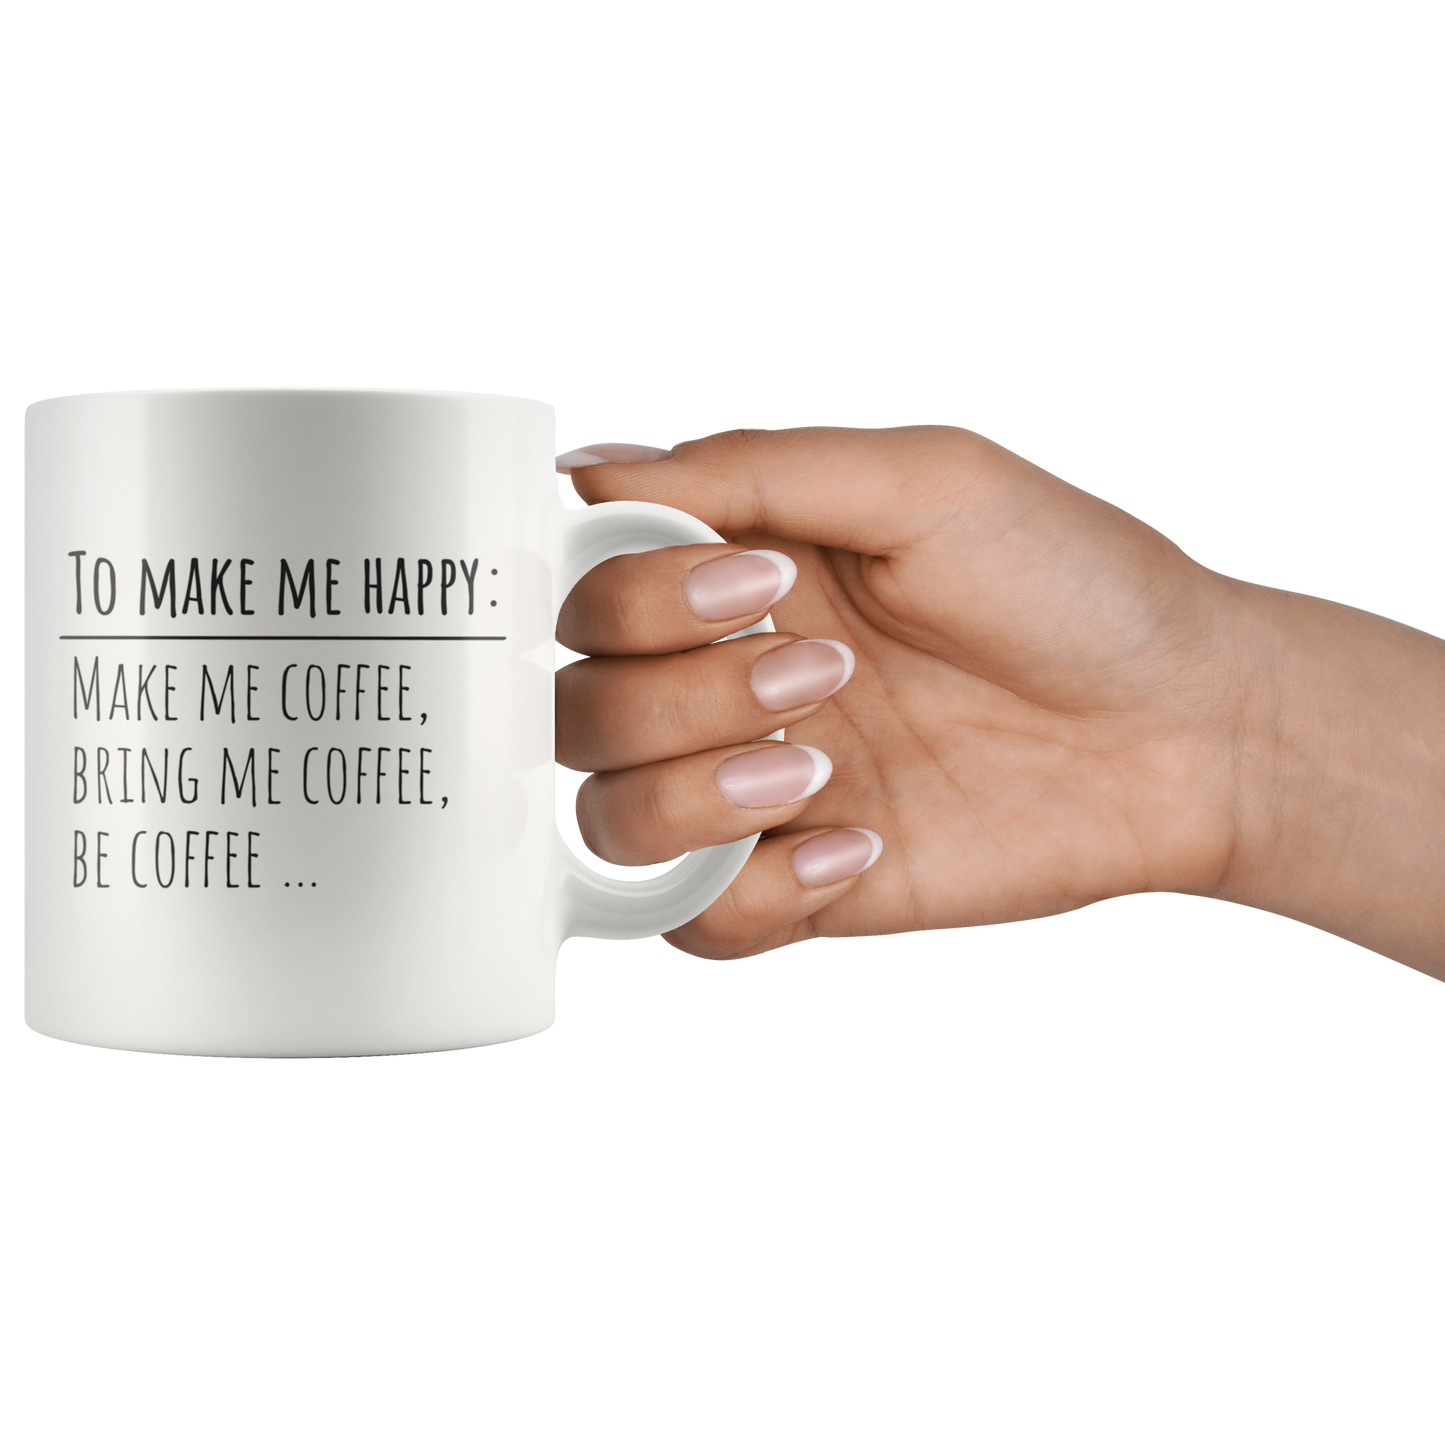 Funny Coffee Mug Coffee Lovers Gift Ceramic Tea Cup Mug with Funny Sayings